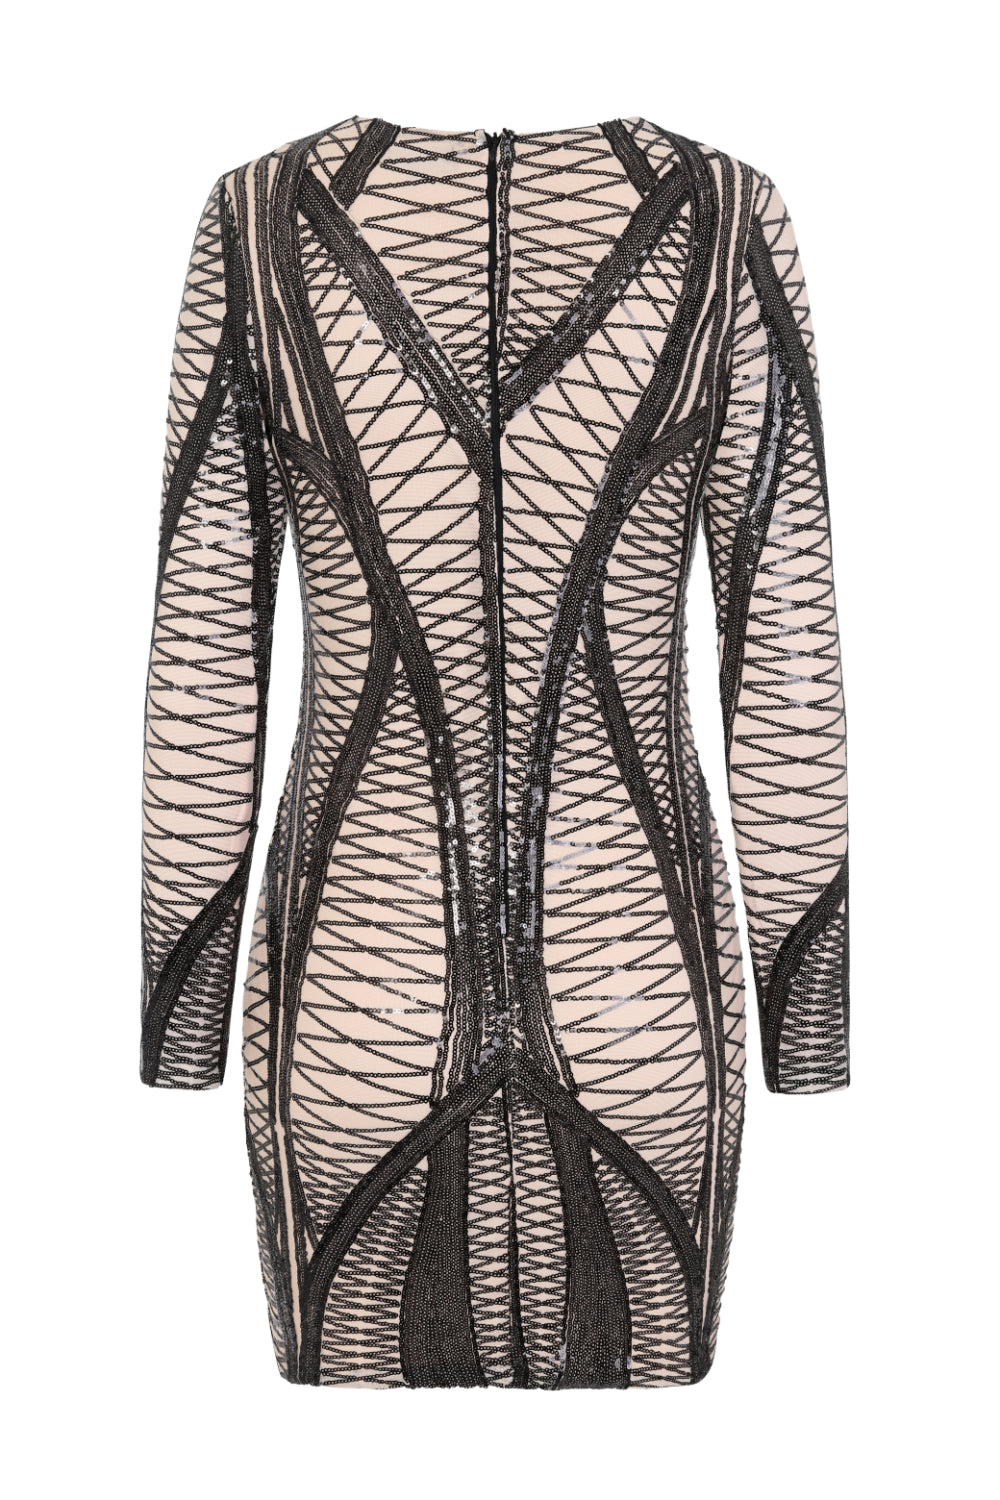 Hilton Luxe Black Nude Cage Sequin Bandage Illusion Dress